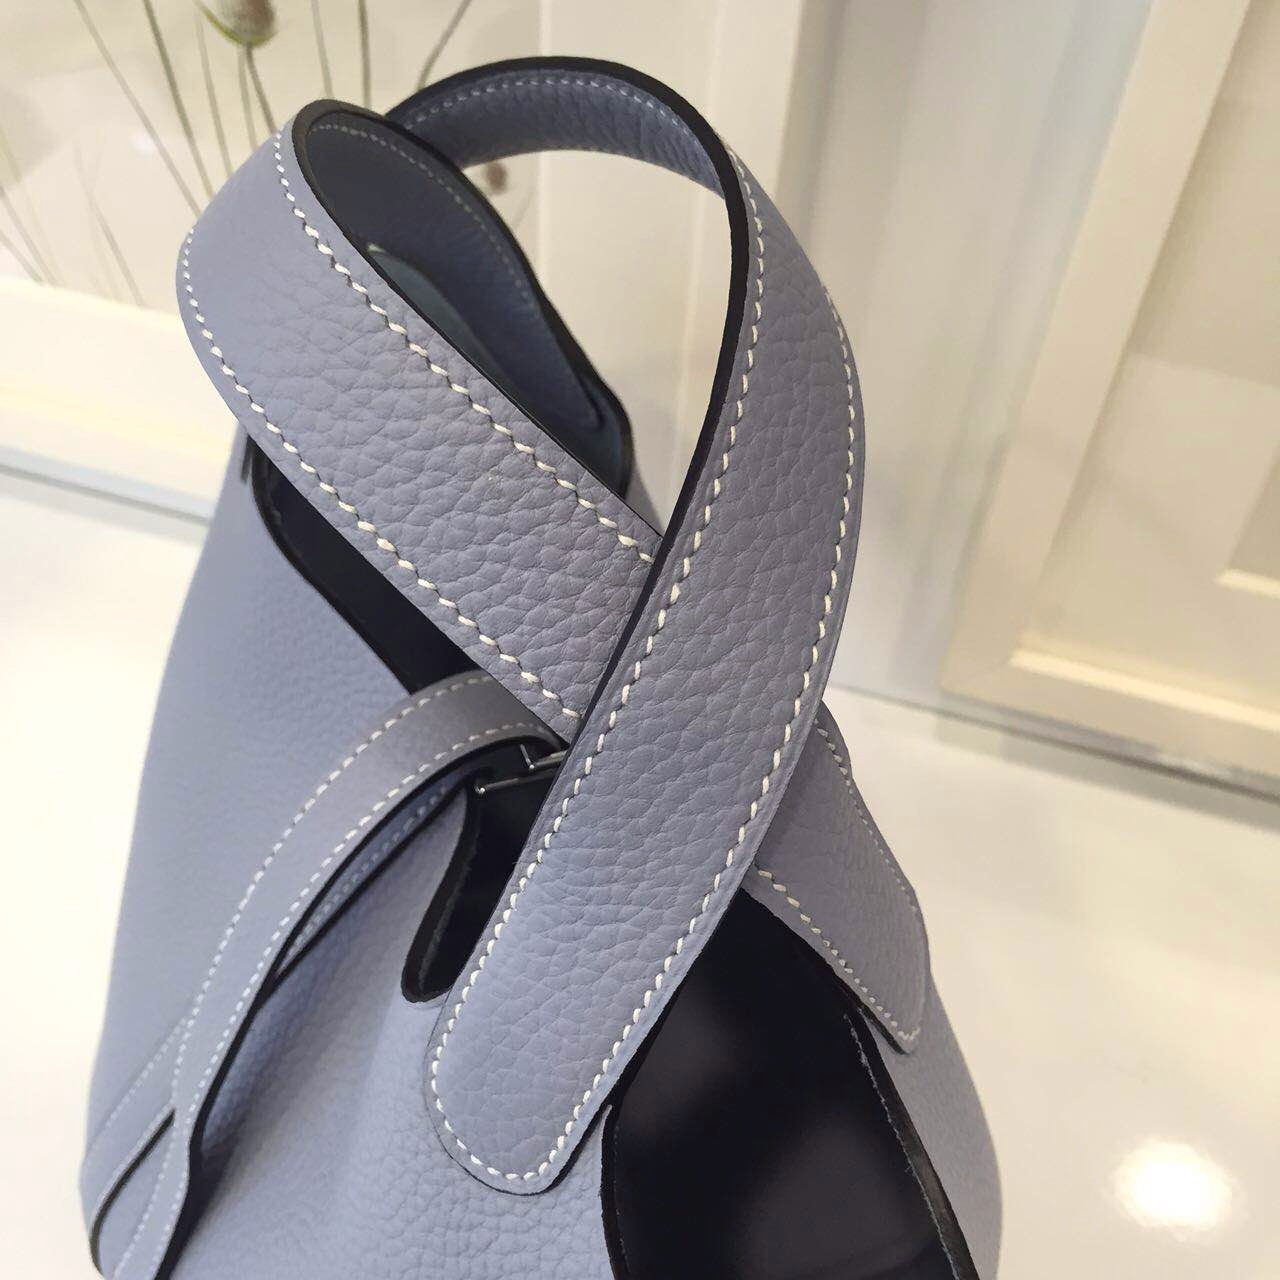 Sale Hermes Picotin Lock Bag J7 Blue Lin Original Togo Leather Ladies&#8217; Shopping Bag